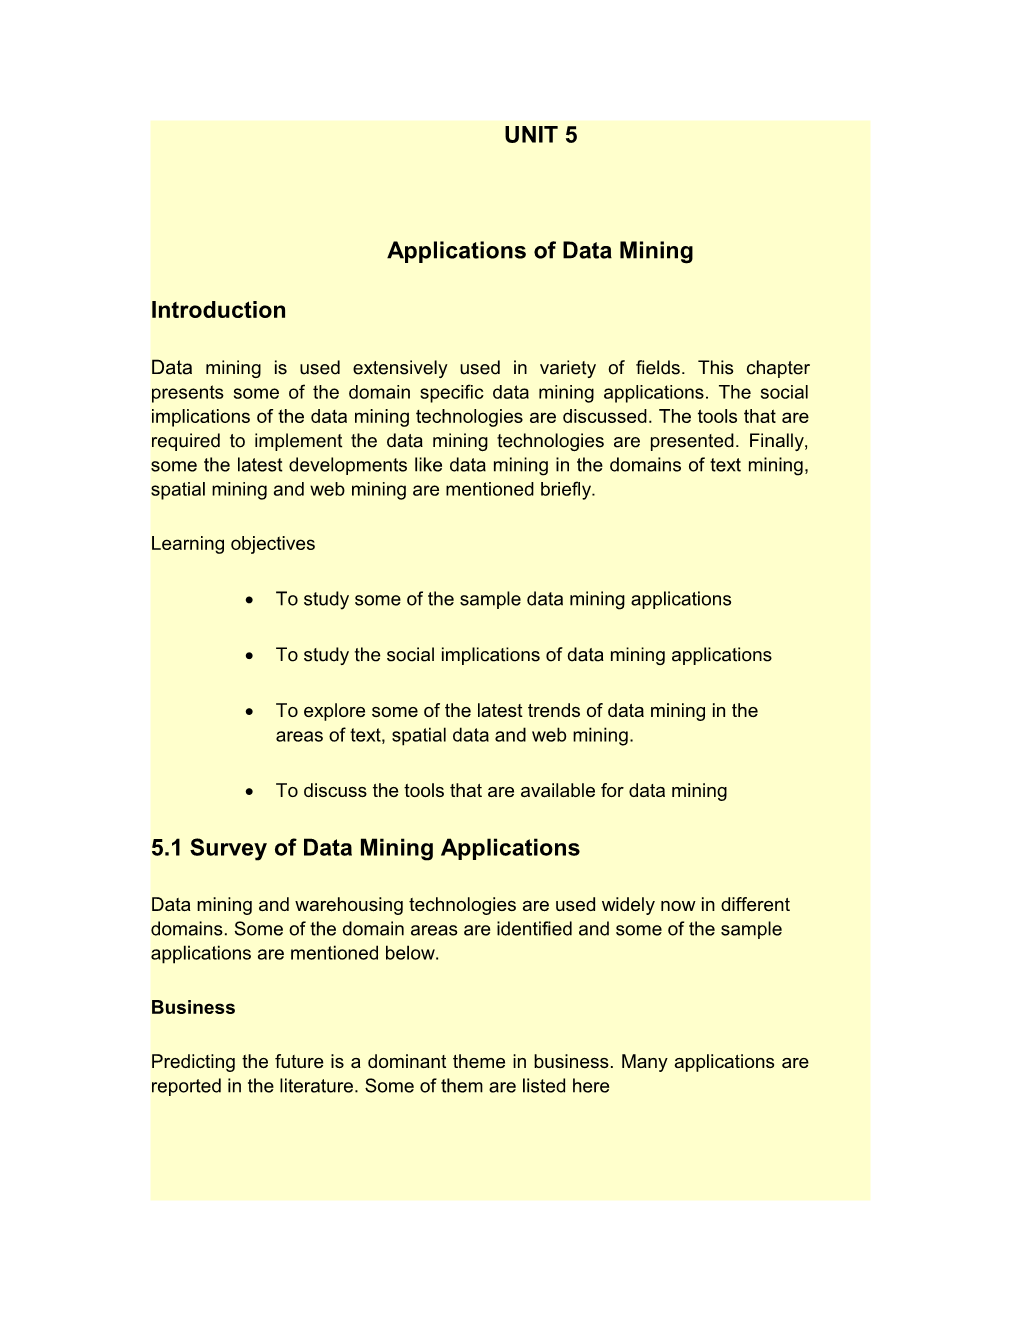 Applications of Data Mining